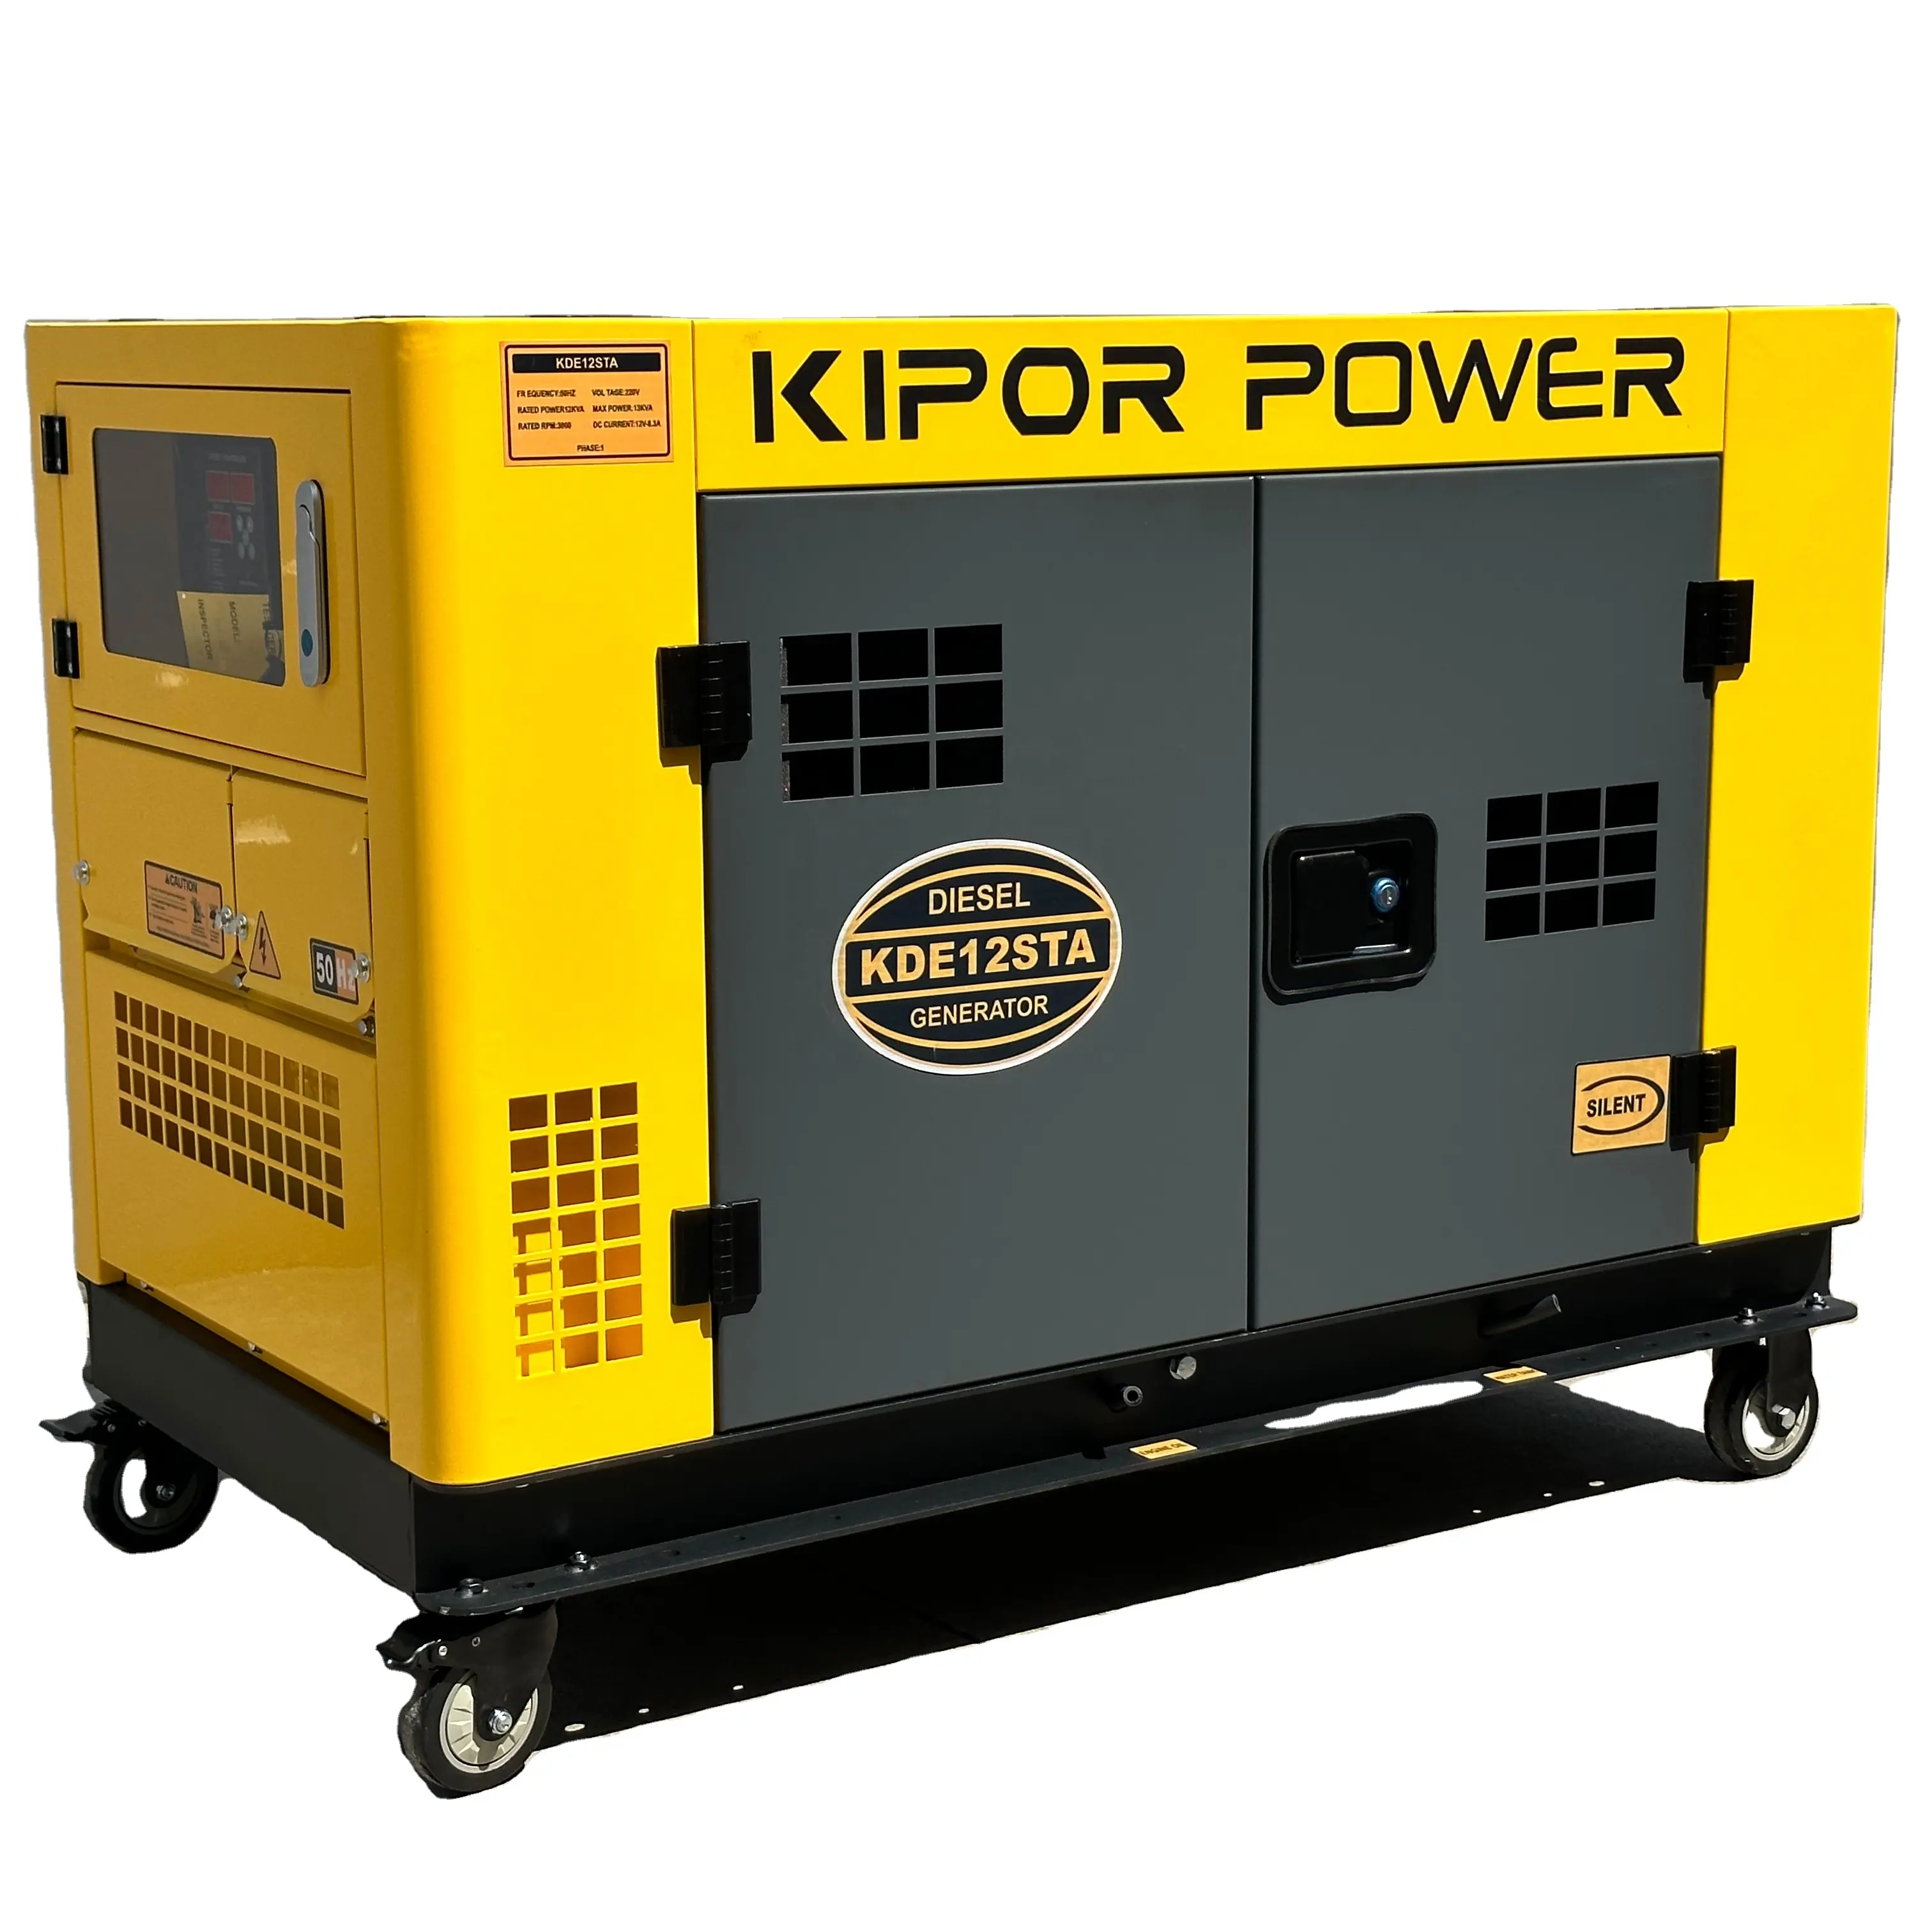 KIPOR POWERサイレントディーゼル発電機10KW 12KVA